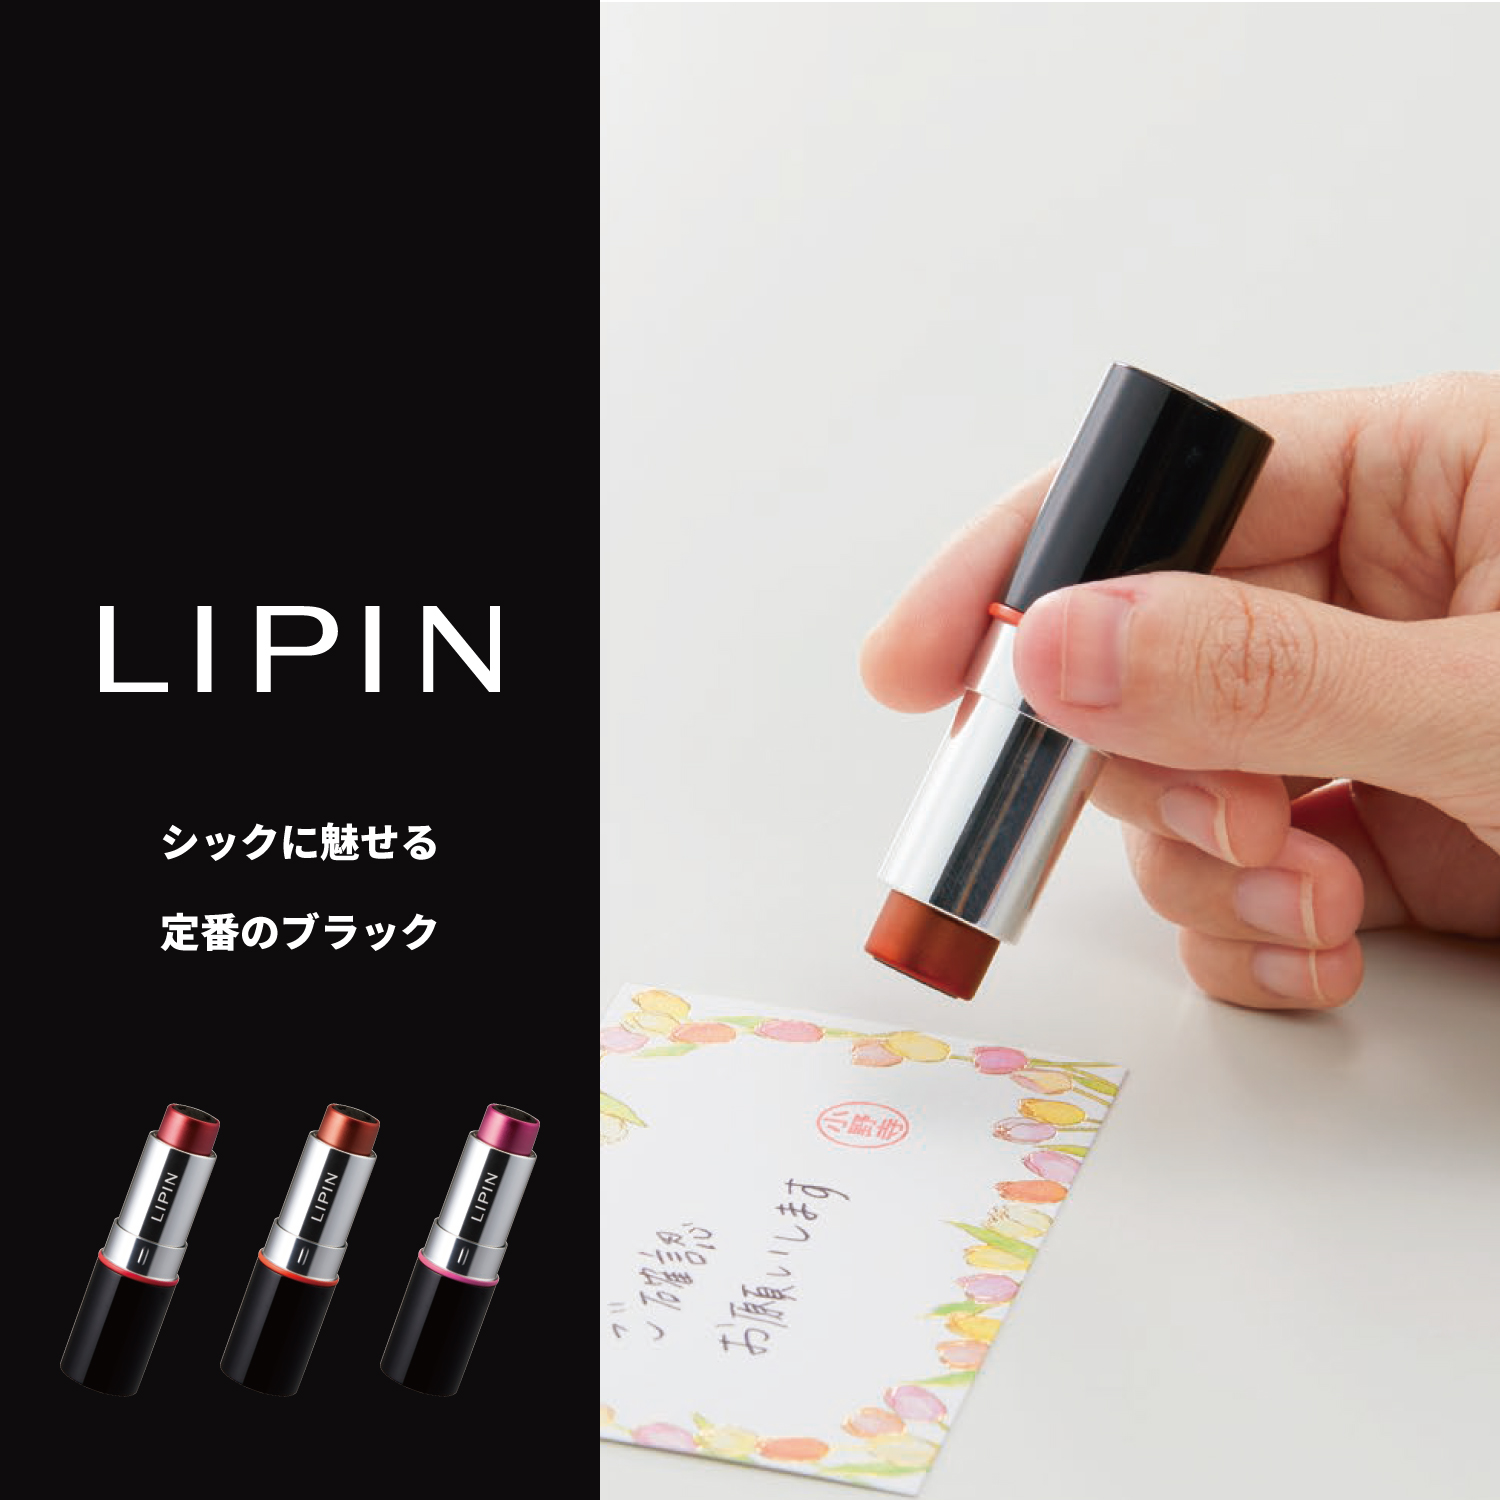 LIPIN+専用補充インキセット【本体色:ピンクゴールド/インキ色:サンセットオレンジ】_6